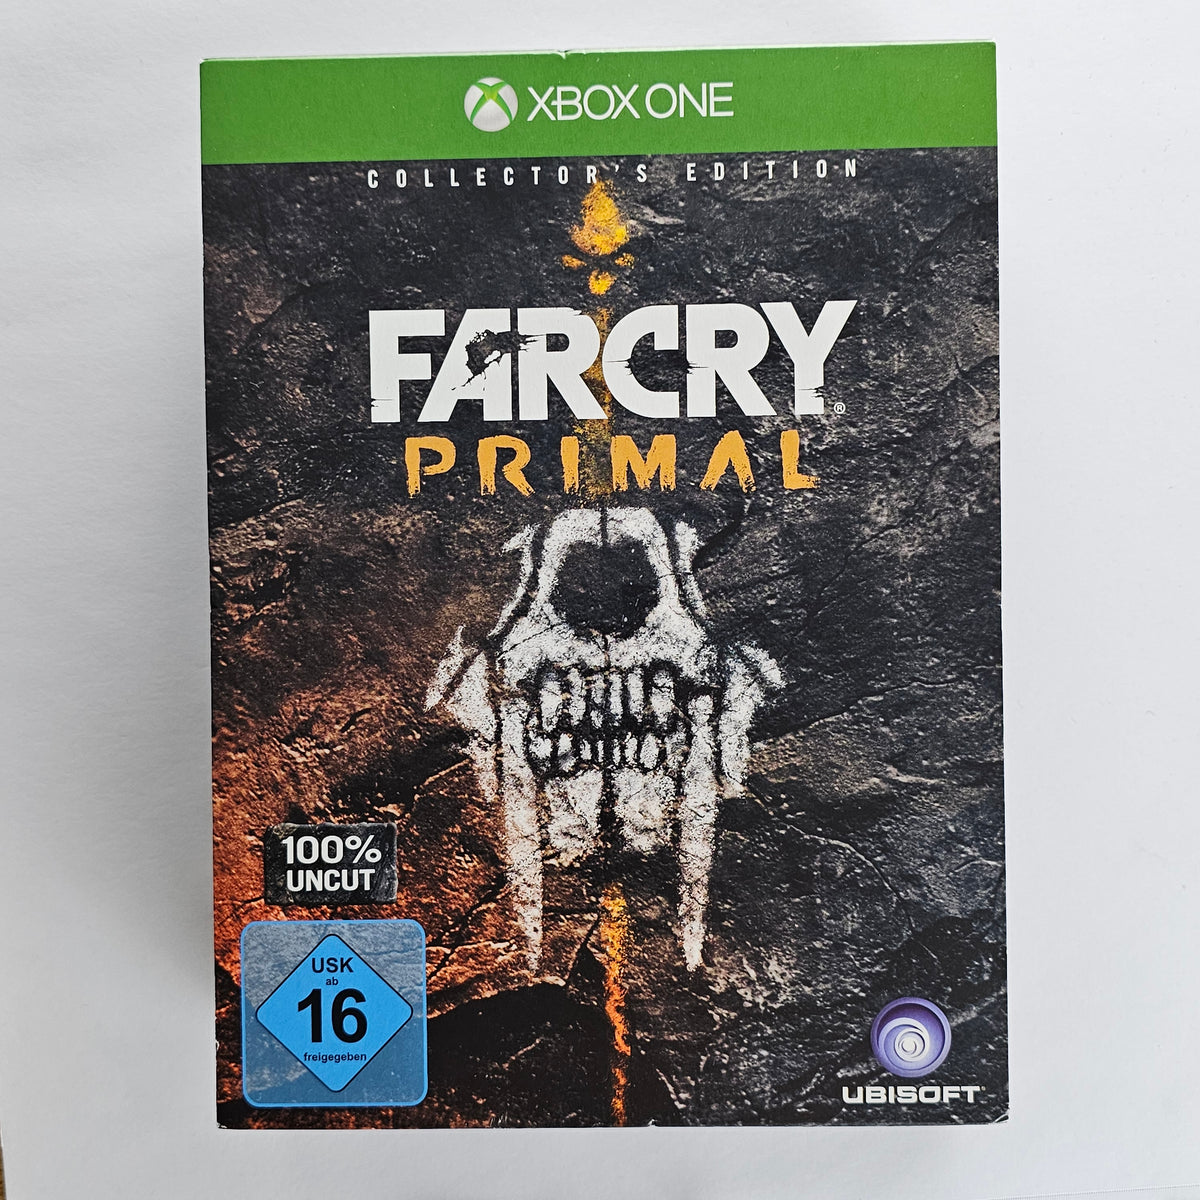 Far Cry Primal Collectors Edit. [XBOXO]